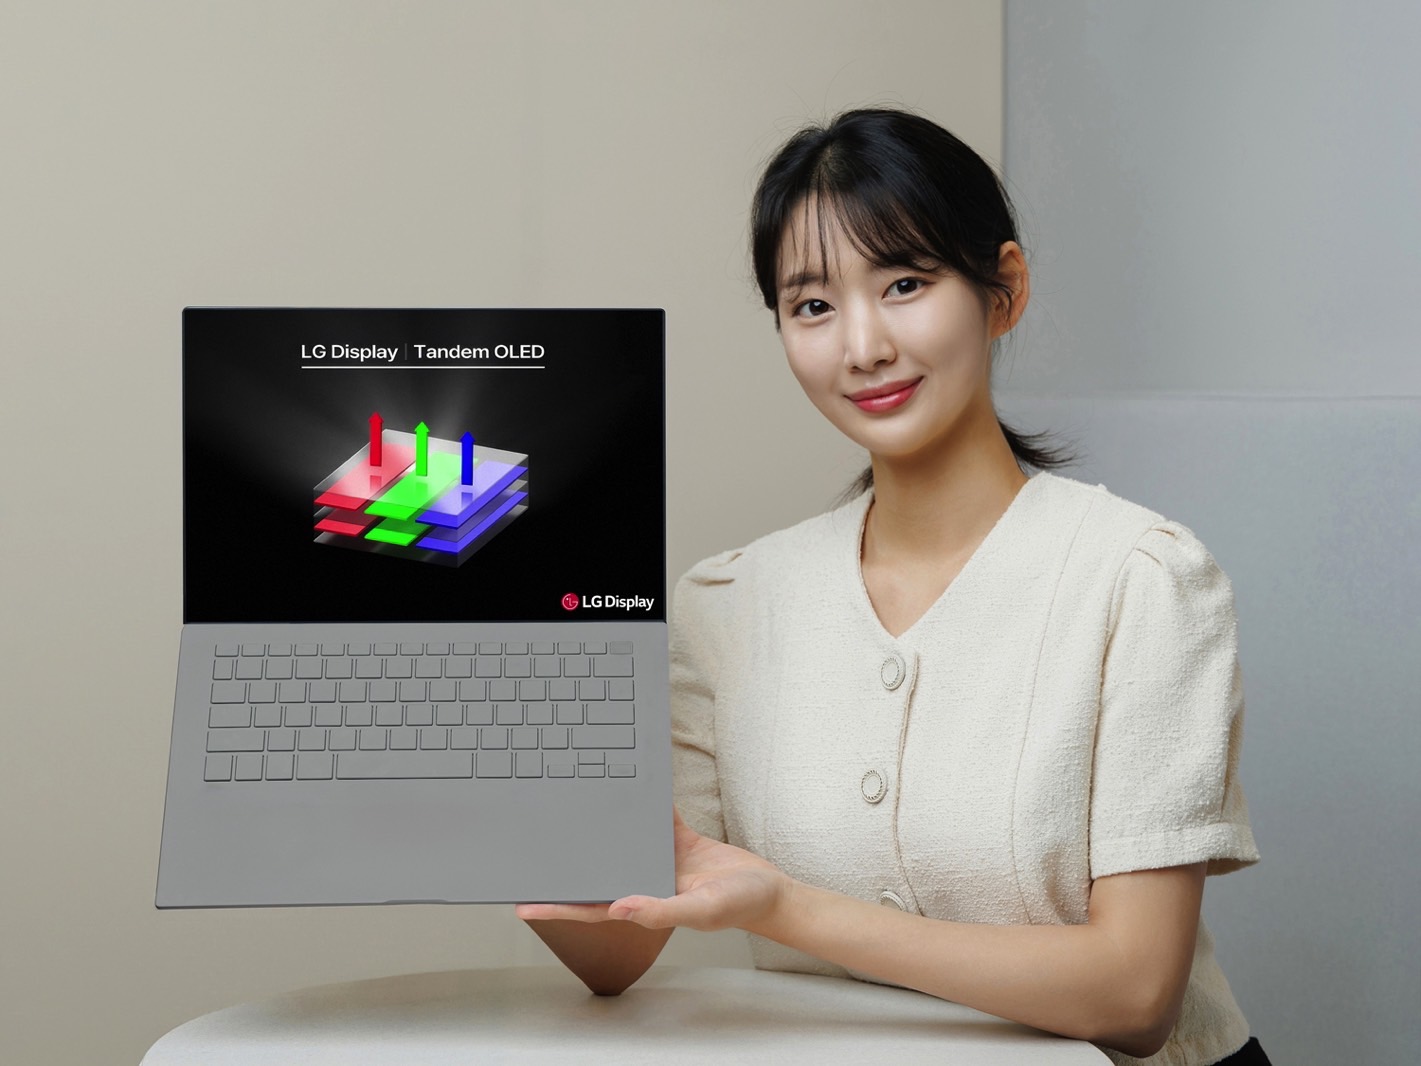 LG's new Tandem OLED screen for laptops.